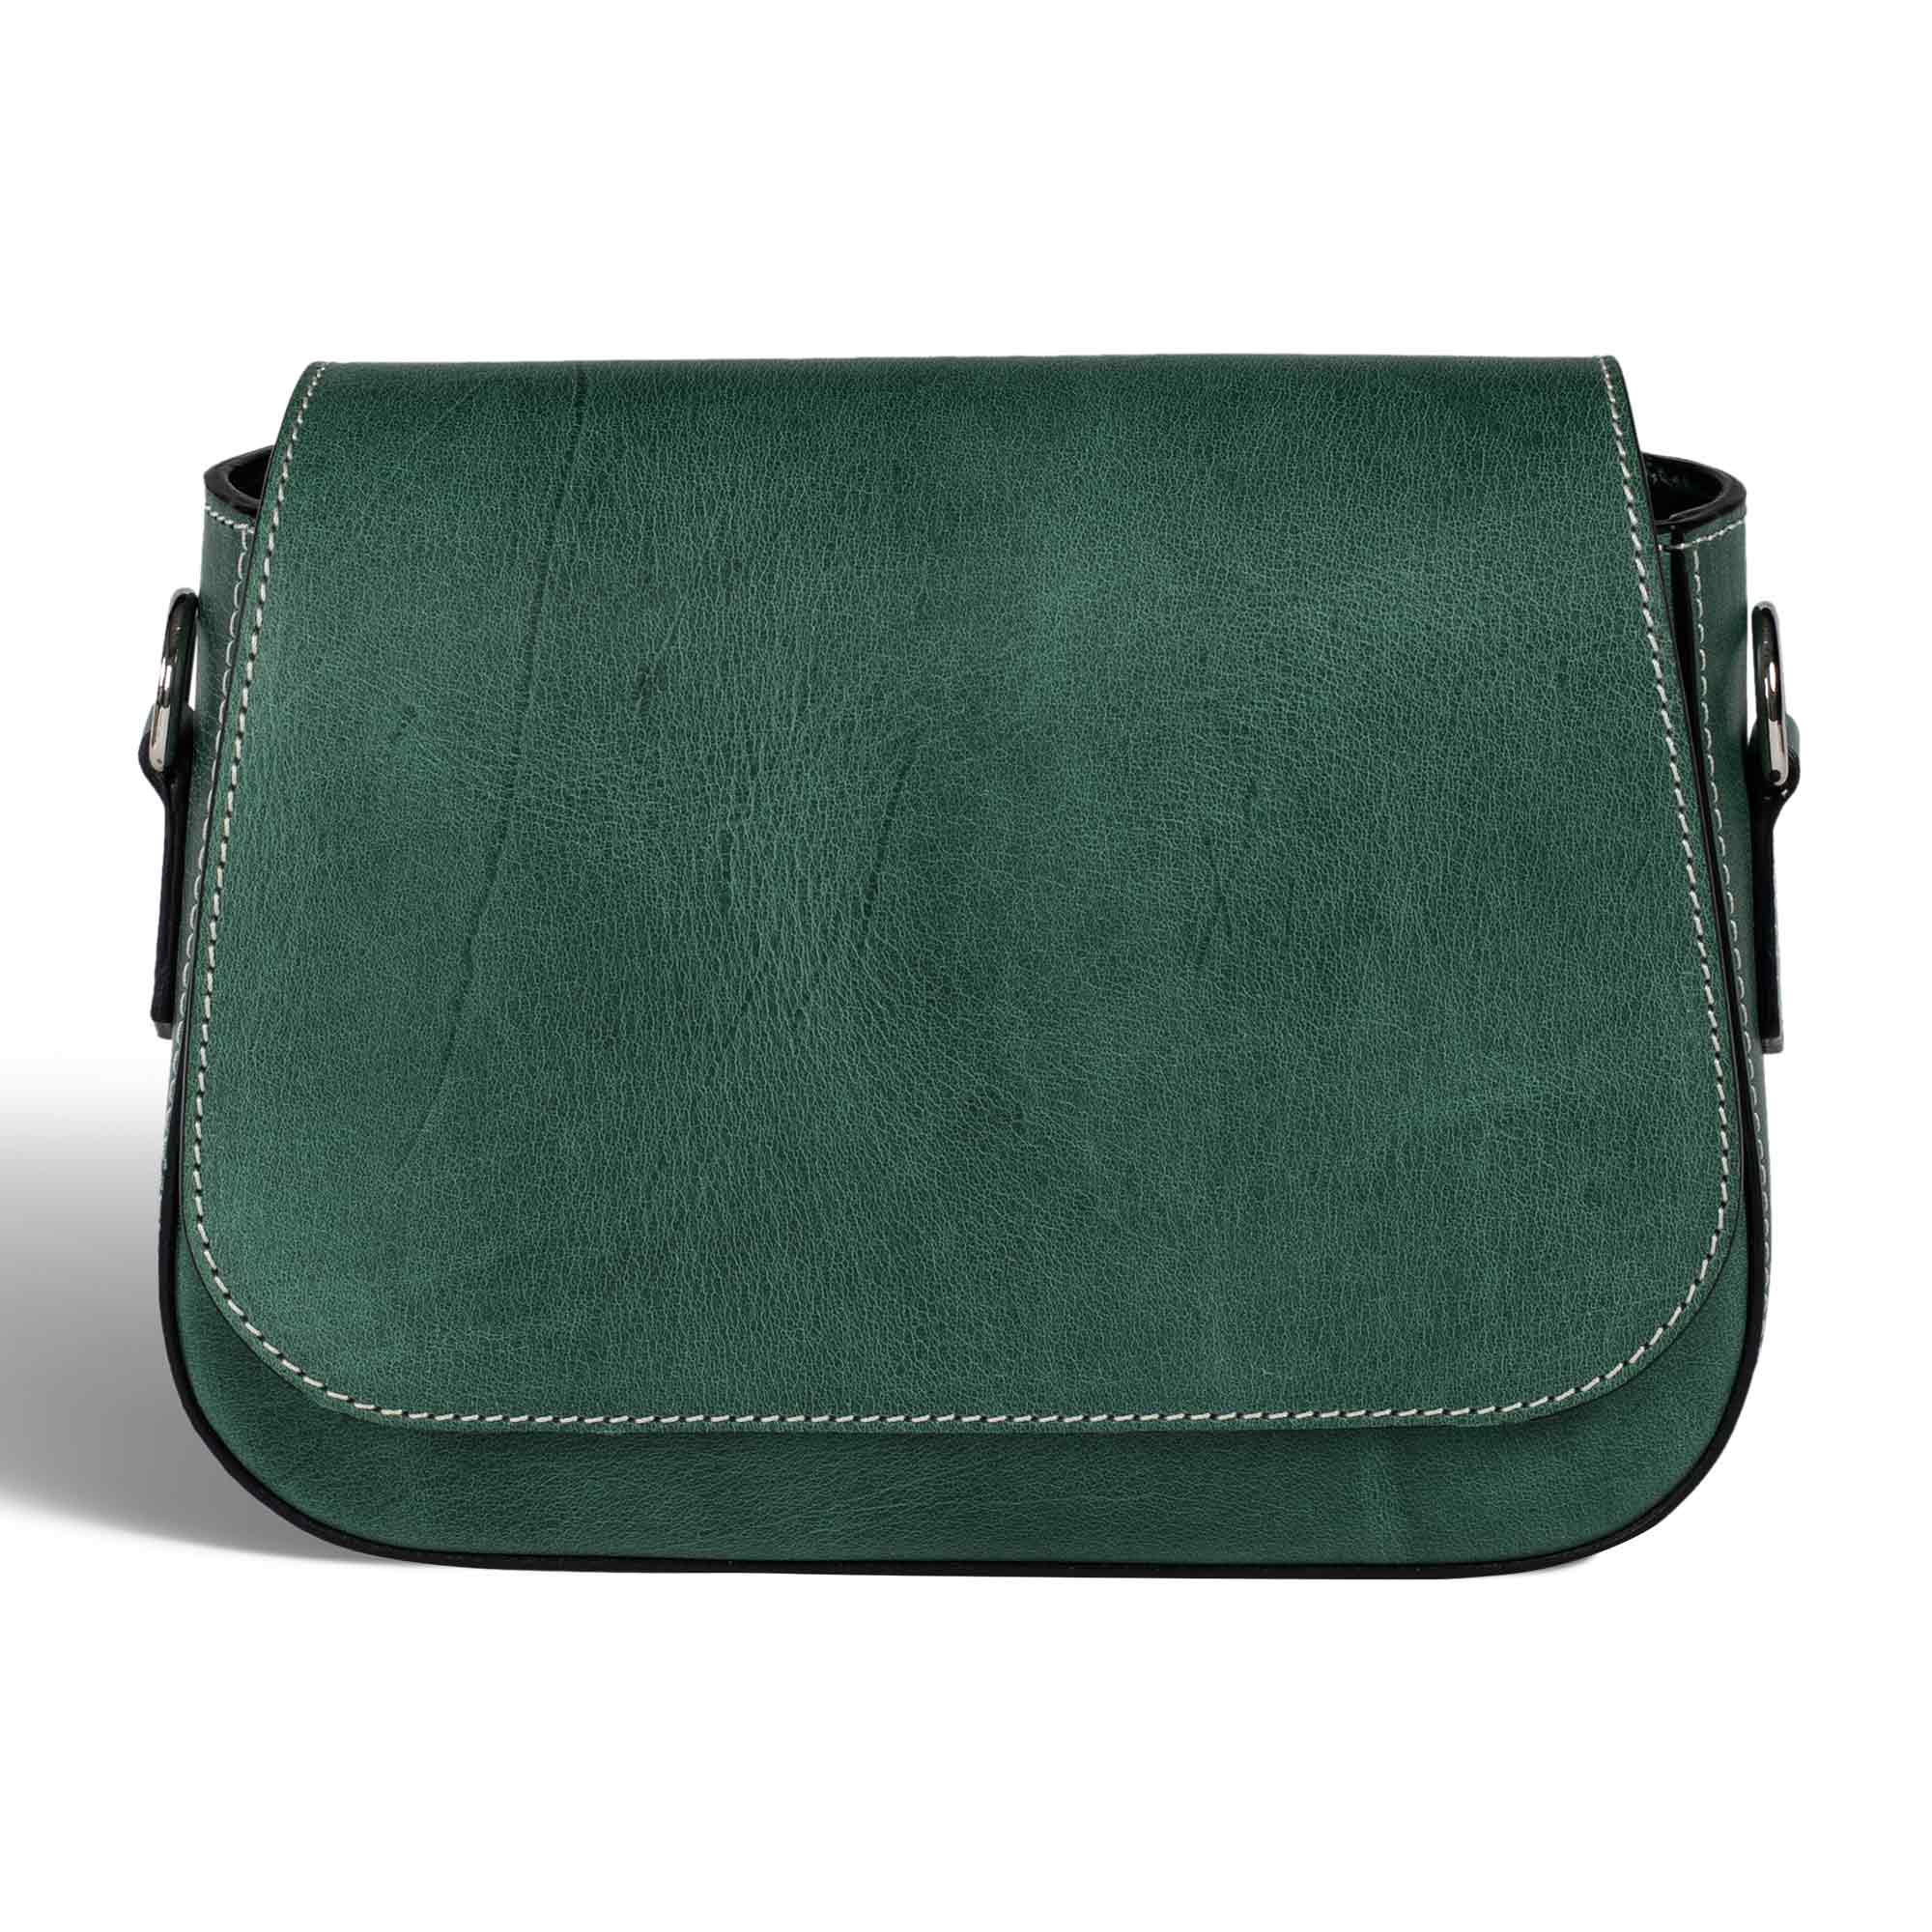 Python Bag Strap in Emerald Green